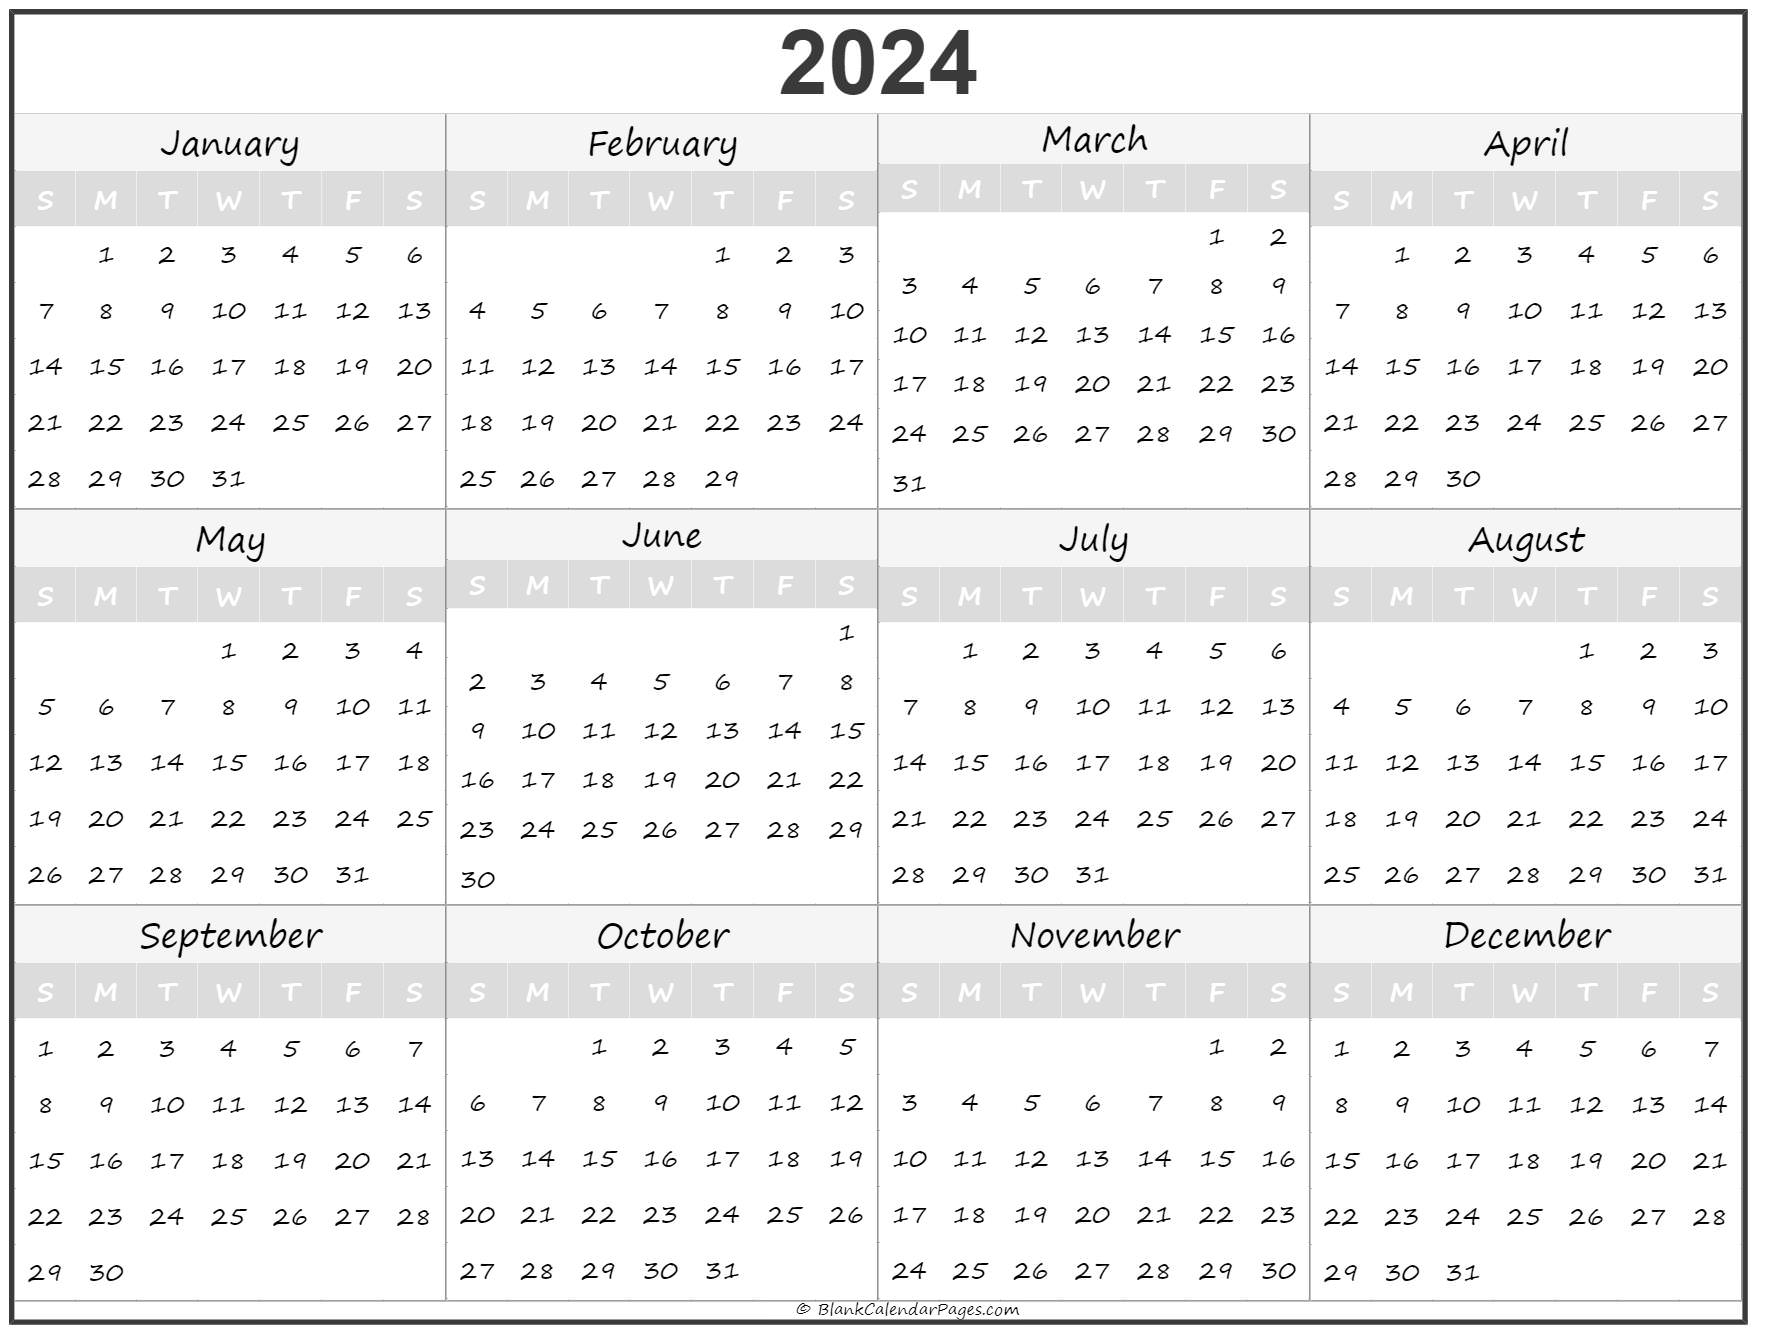 ibjjf-2024-calendar-2024-calendar-printable